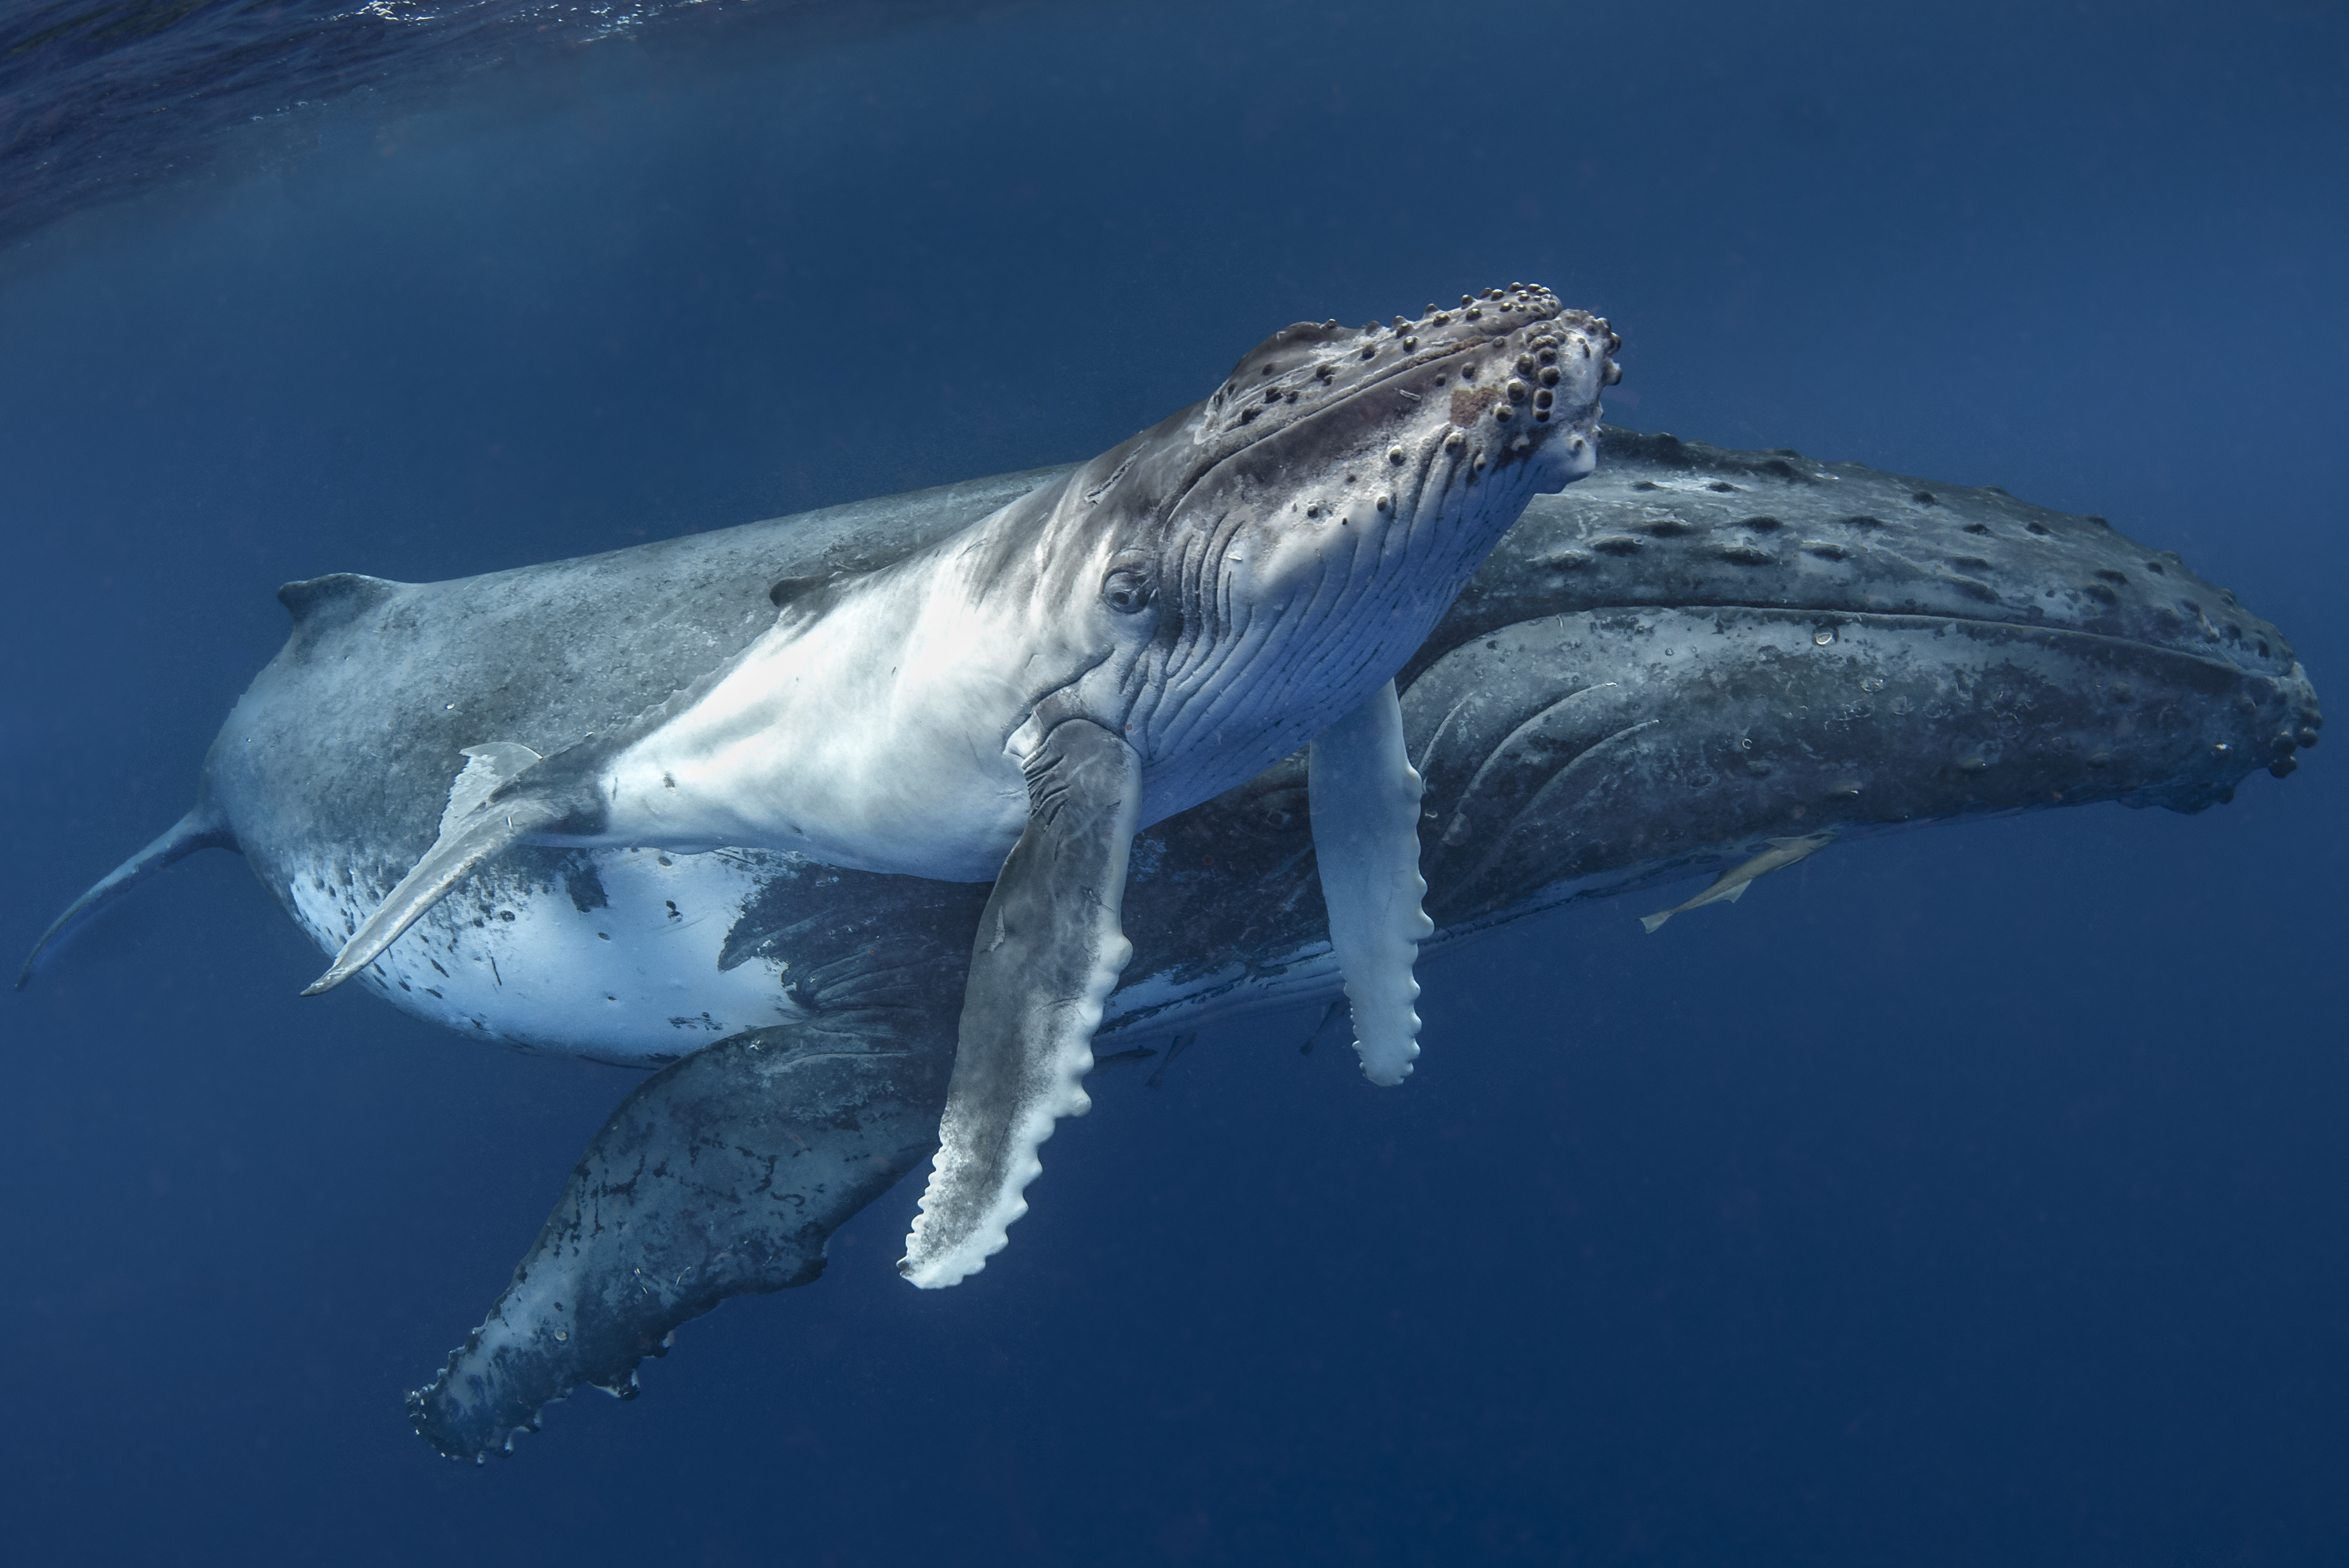 giant humpback whale